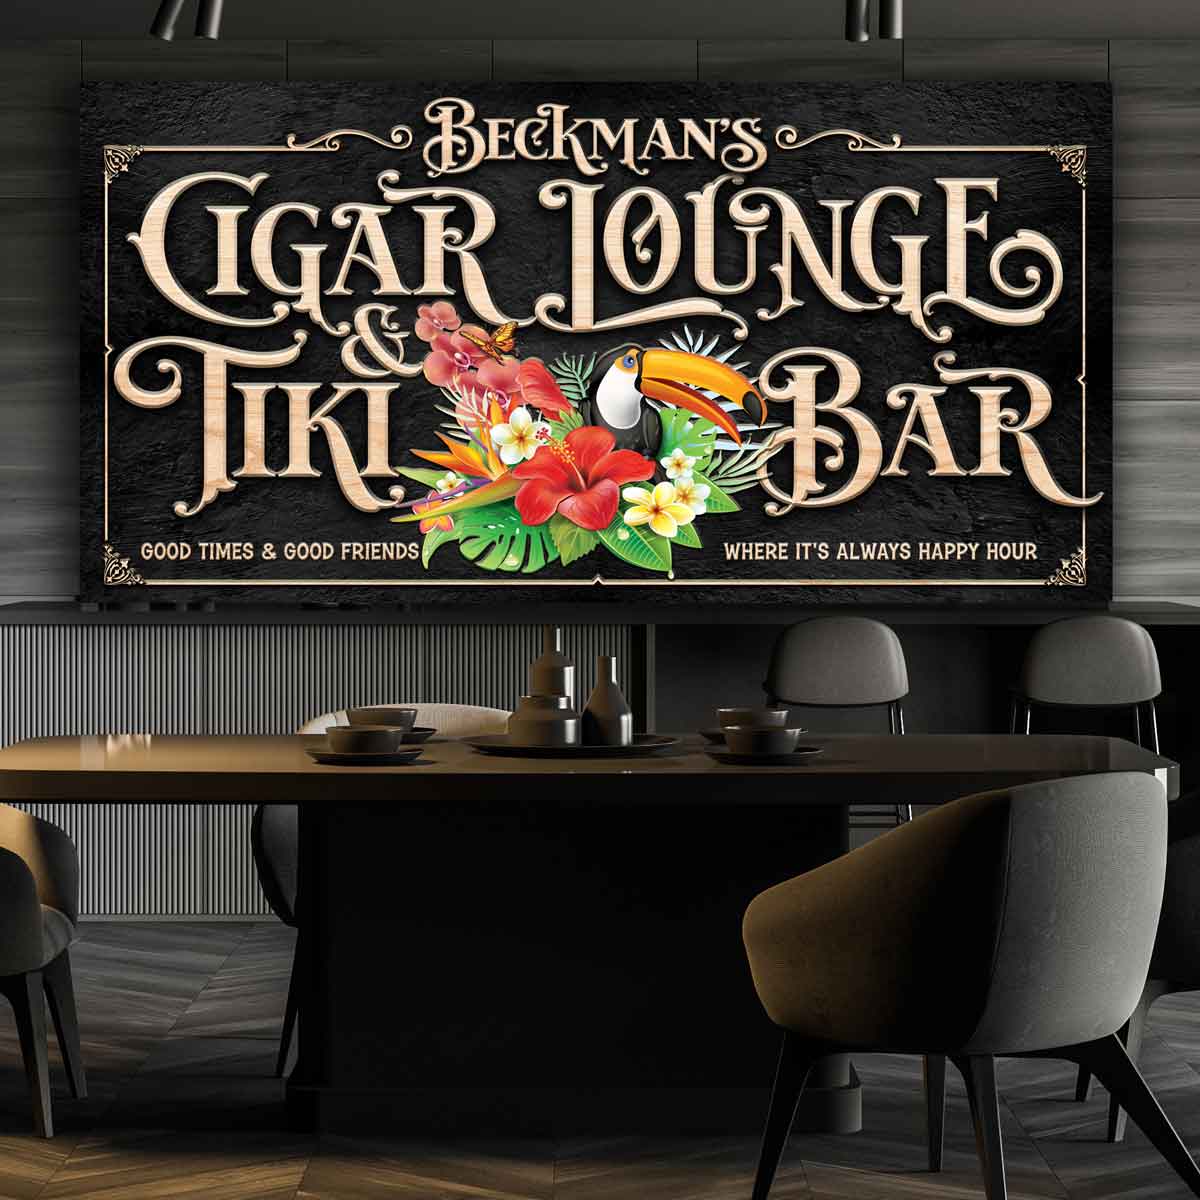 Tiki Bar -Cigar Lounge & Tiki Bar Sign on black background with tropical flowers and bird.